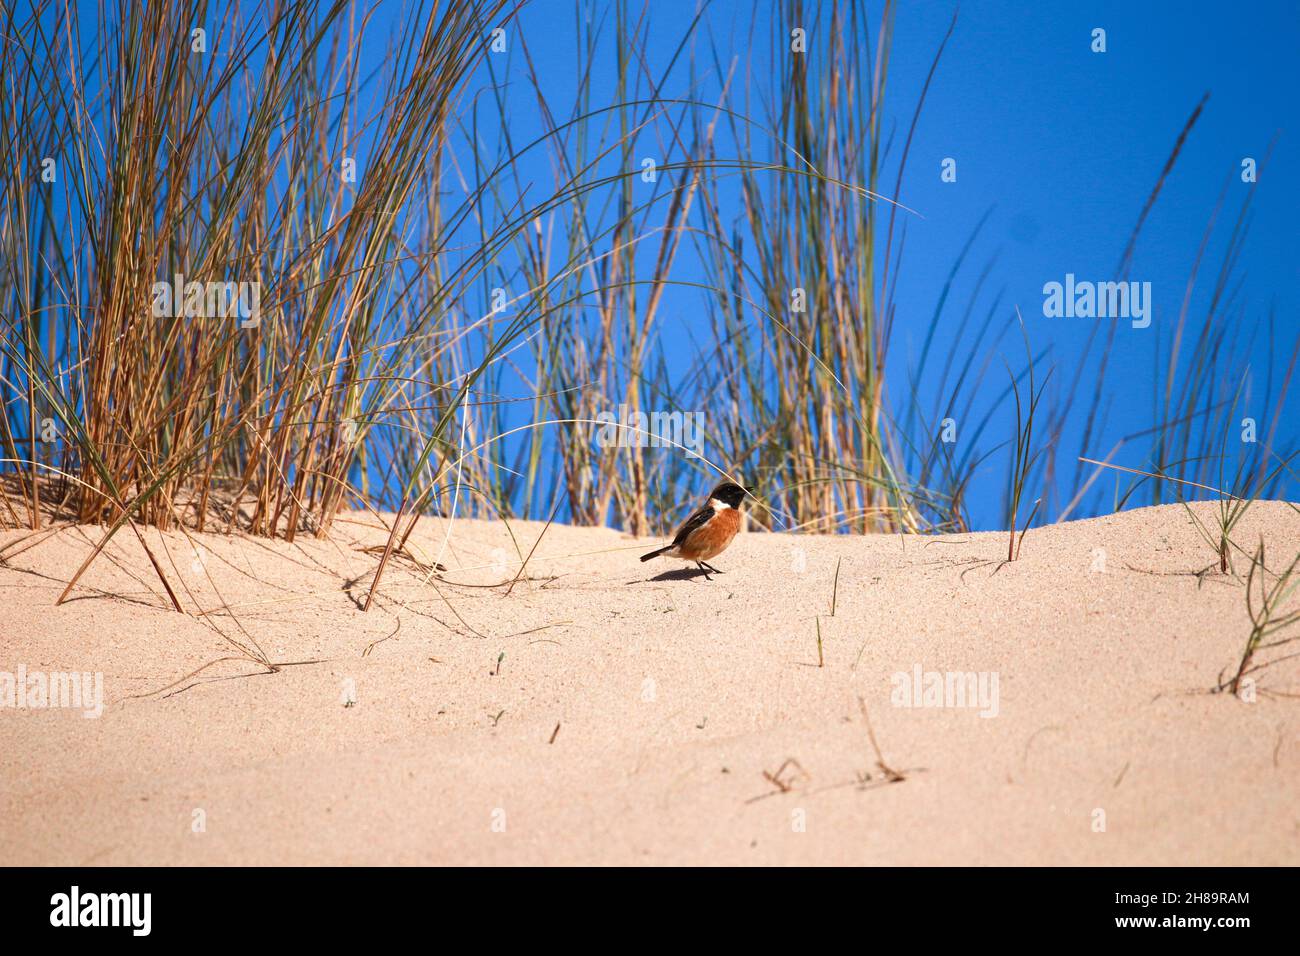 European Stonechat on a sand dune. Wildlife scene from nature Stock Photo